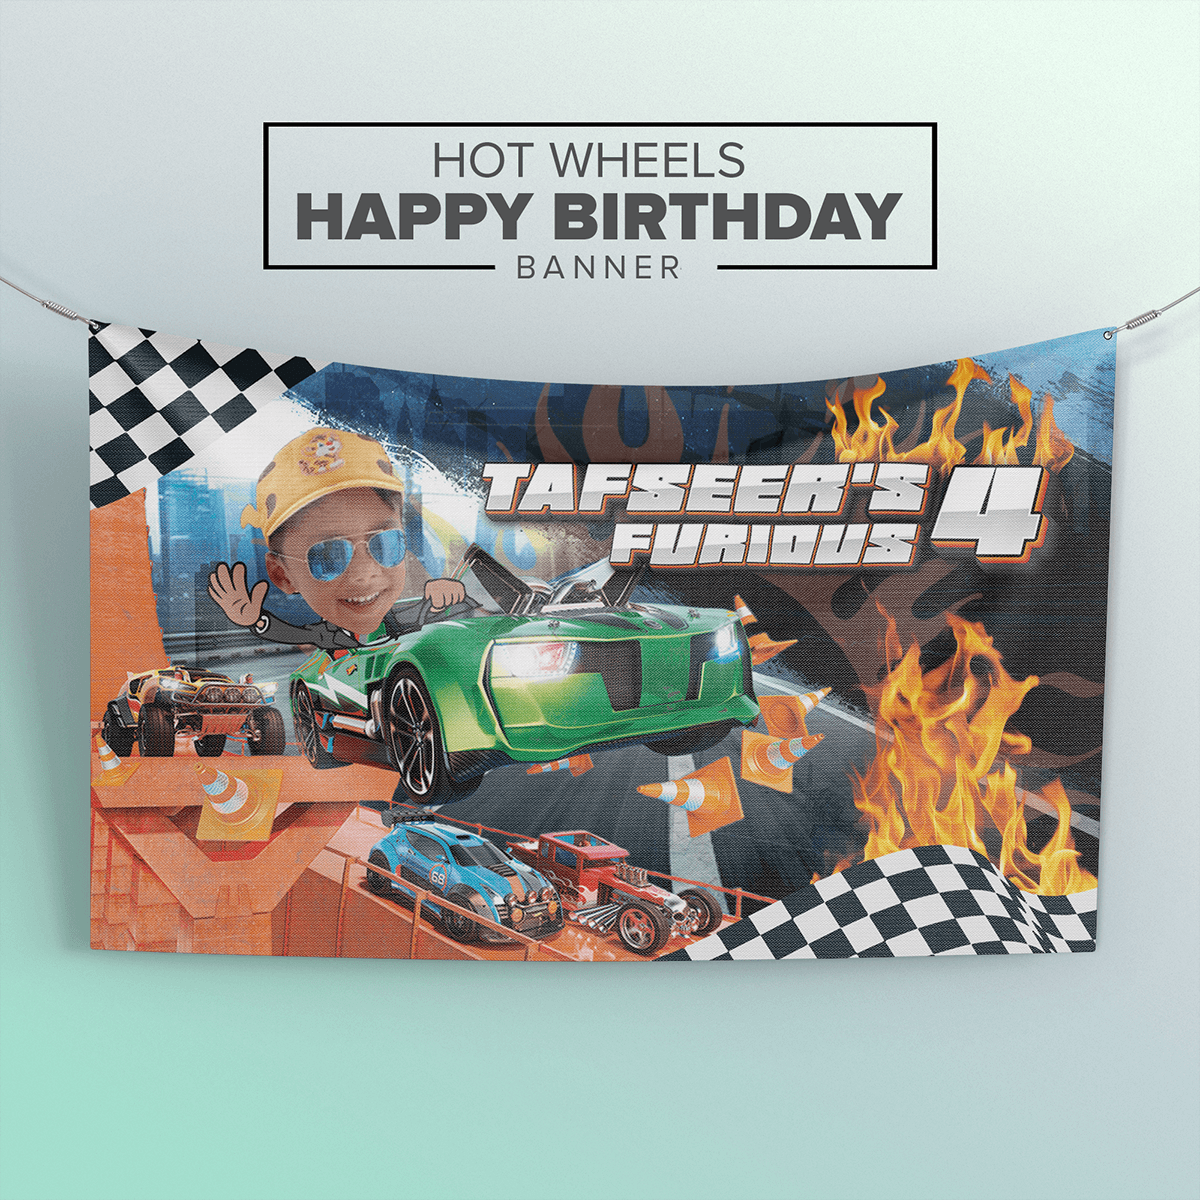 Hot Wheels kids birthday party birthday banner Happy Birthday Banner Racing